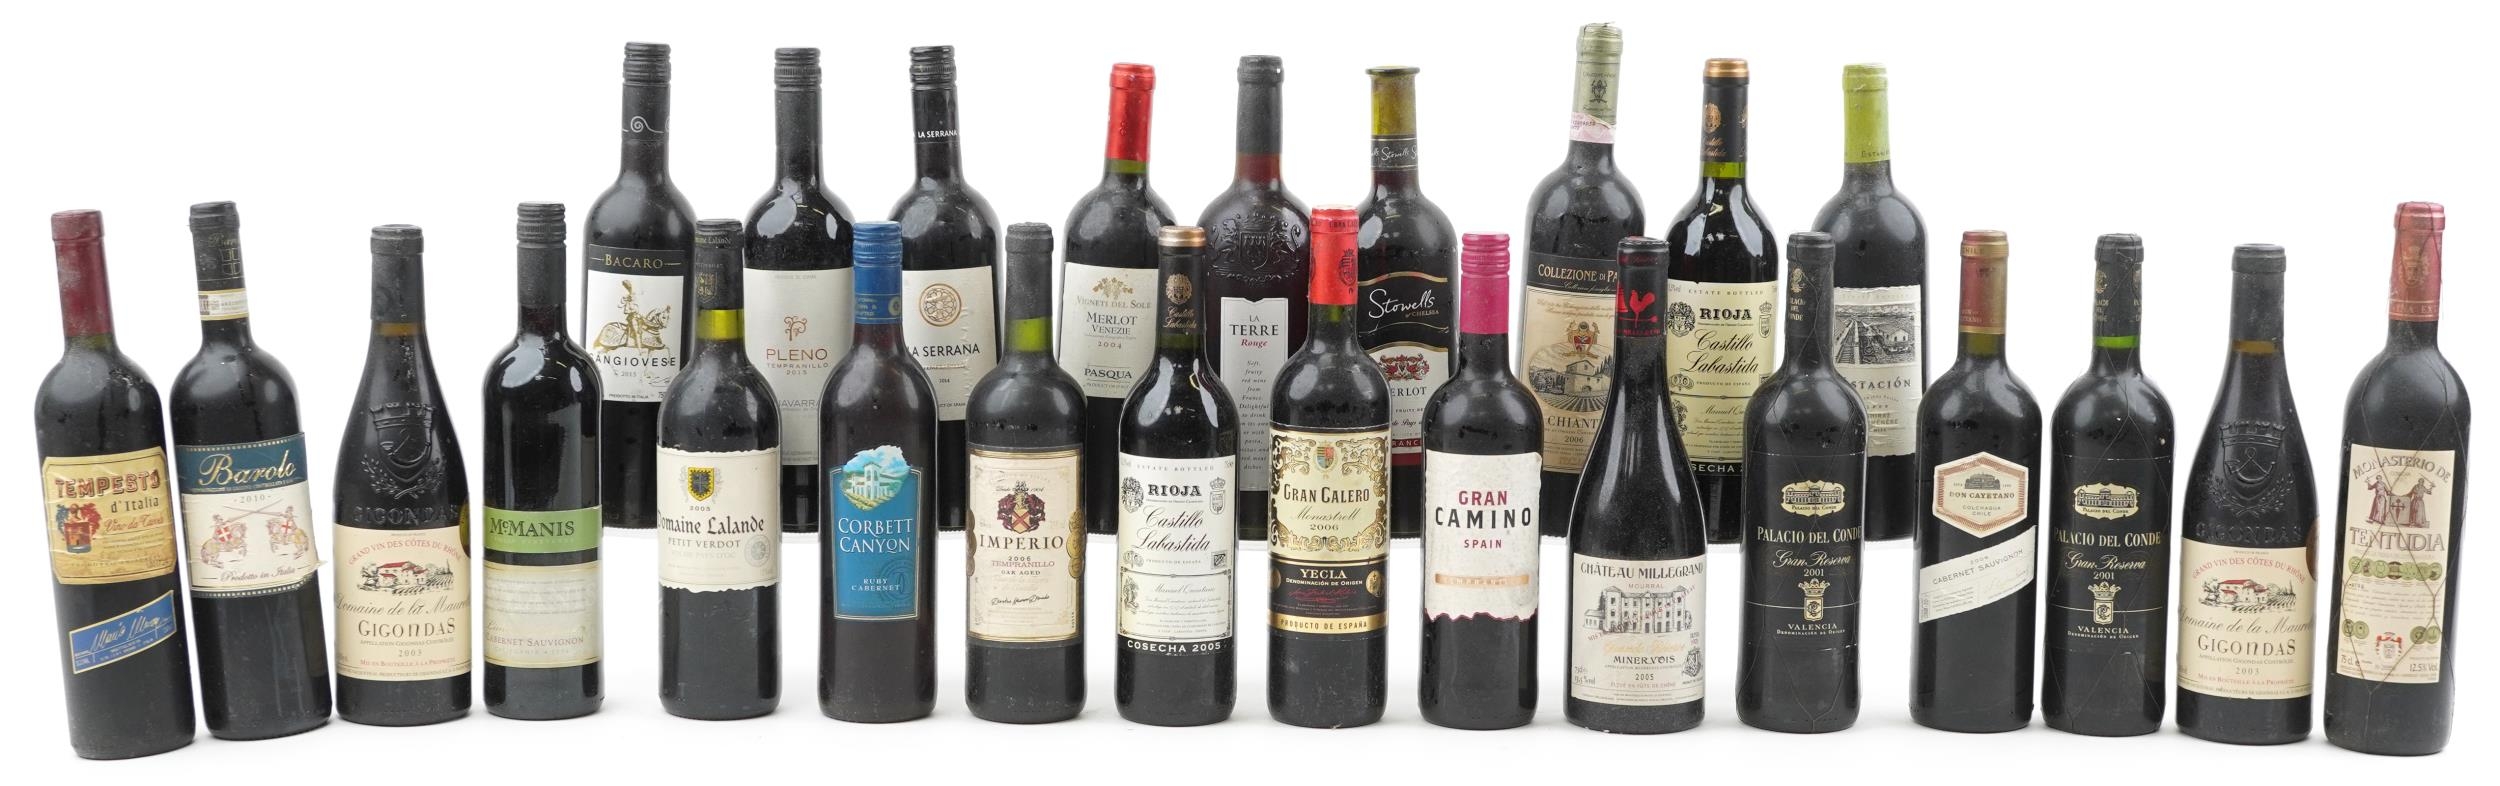 Twenty five bottles of red wine including 2003 Gigondas Cotes du Rhone